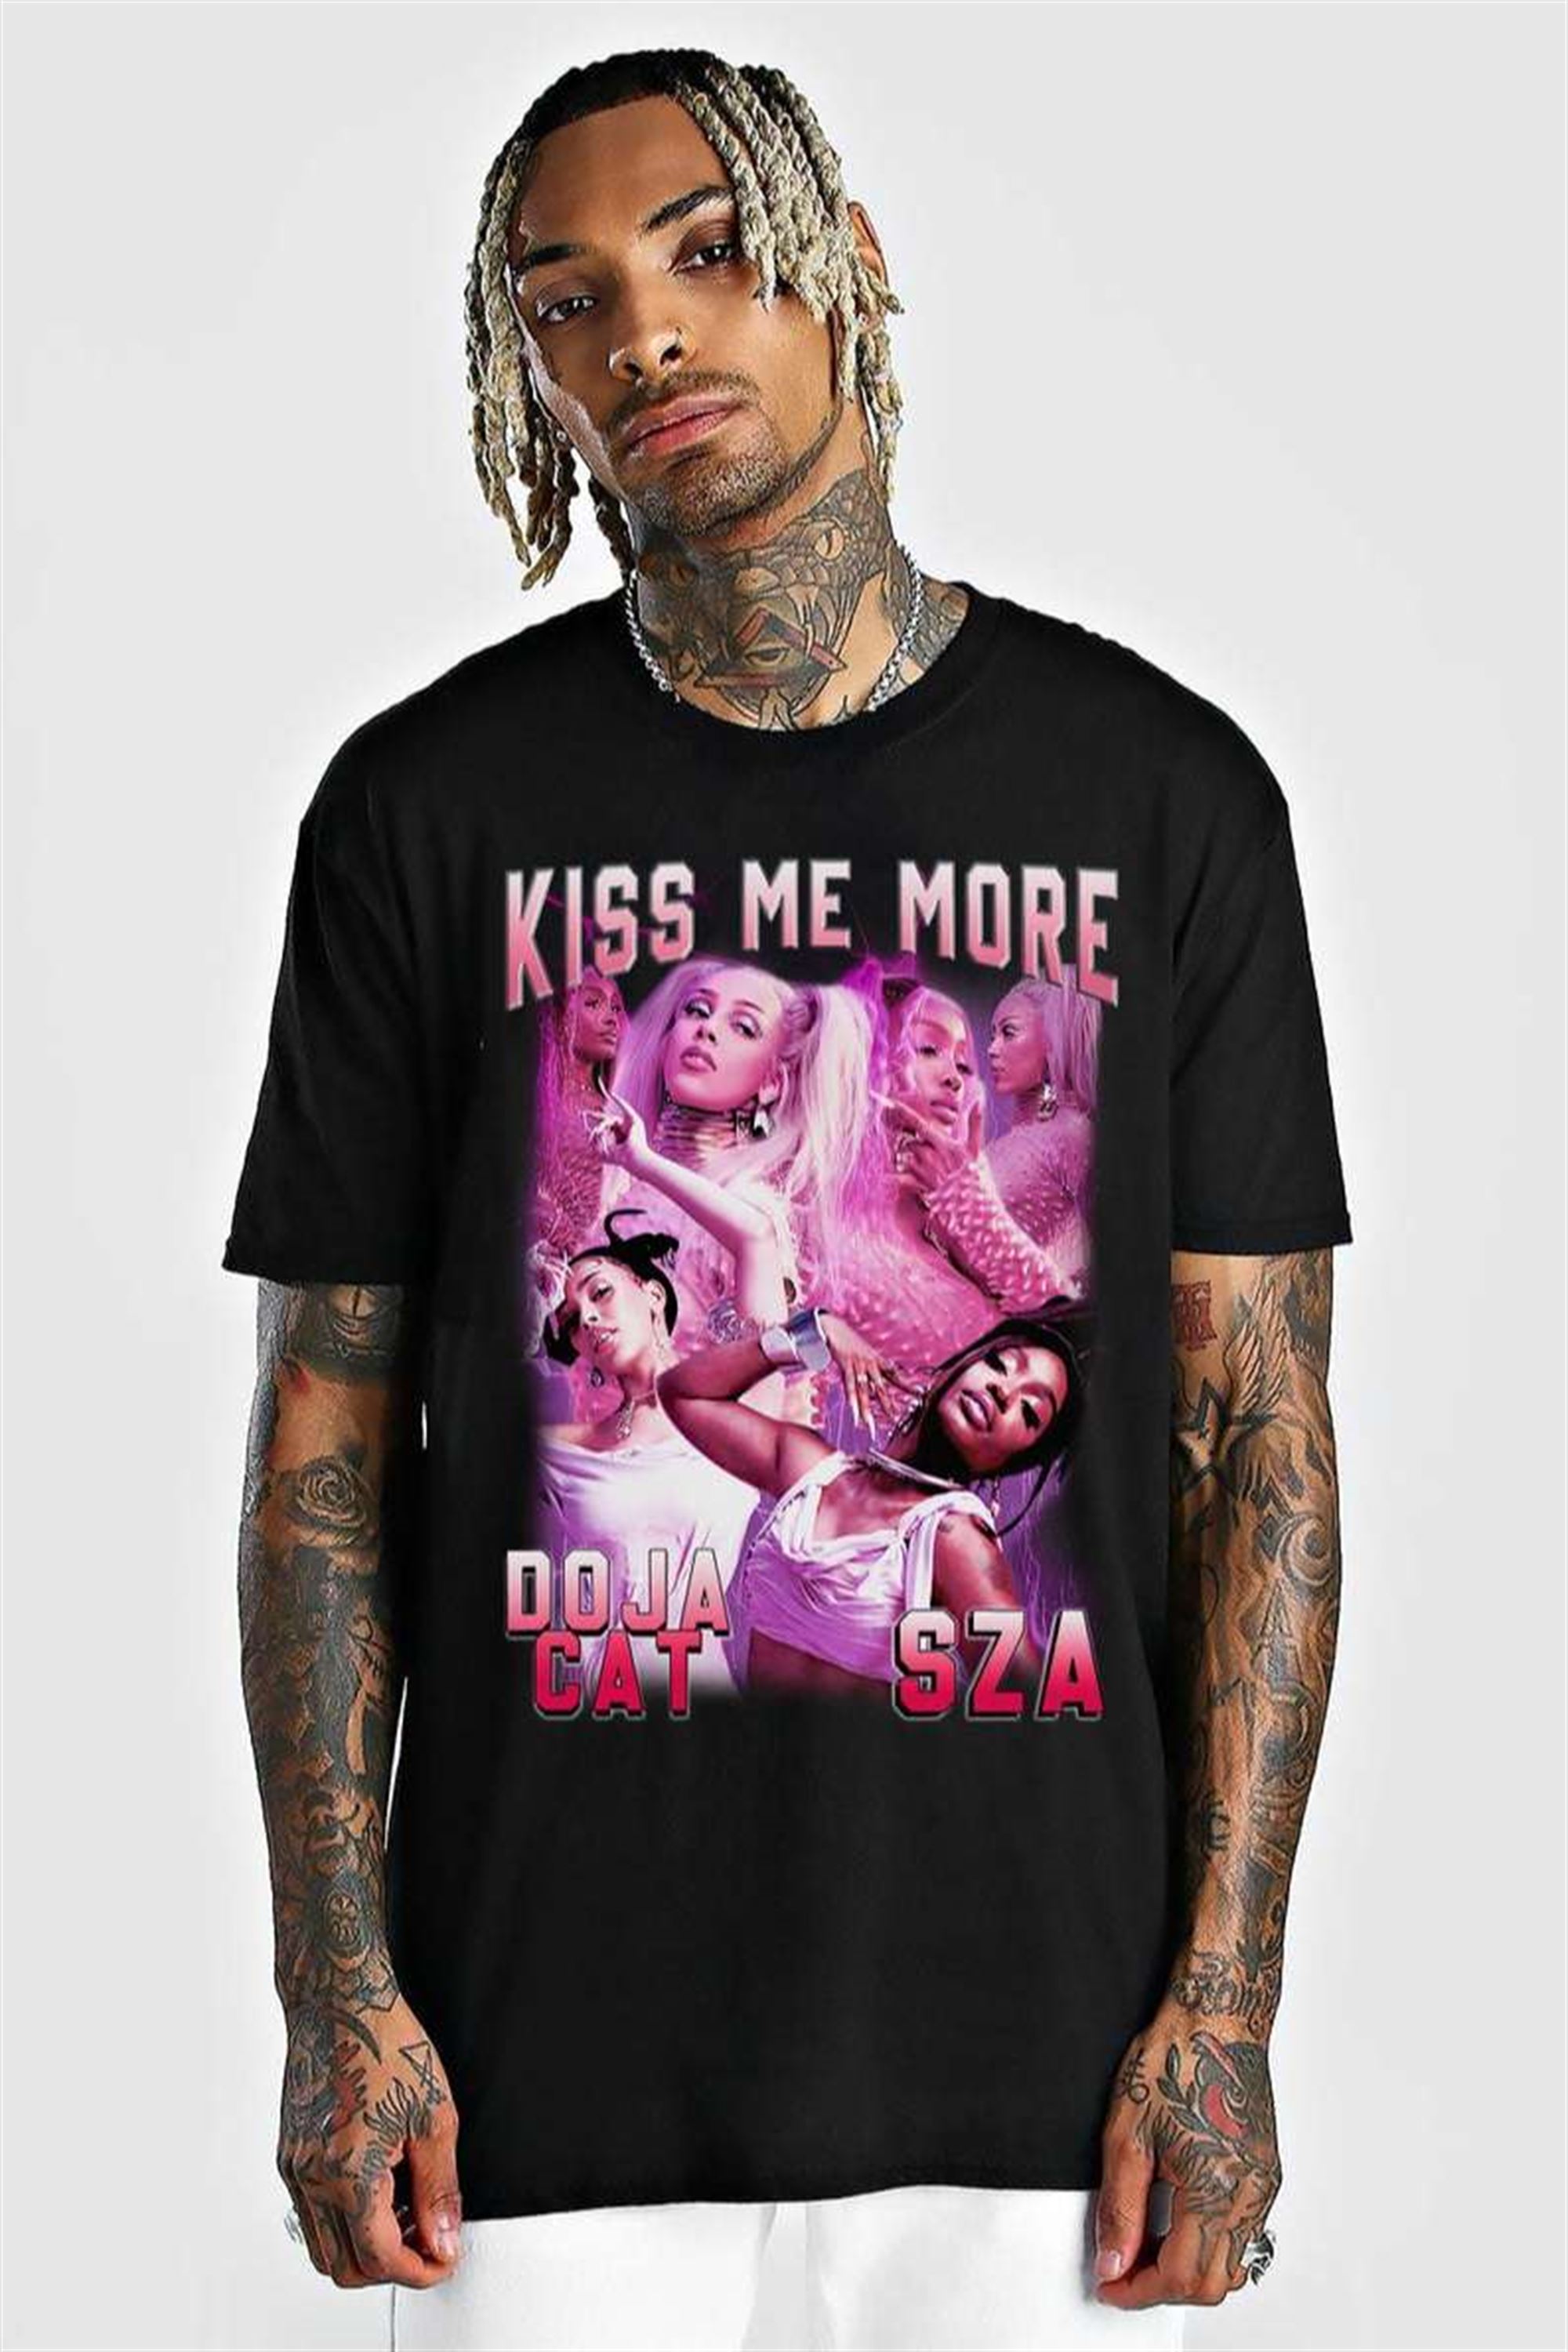 Doja Cat X Sza Kiss Me More Vintage Classic Unisex T Shirt Plus Size Up To 5xl